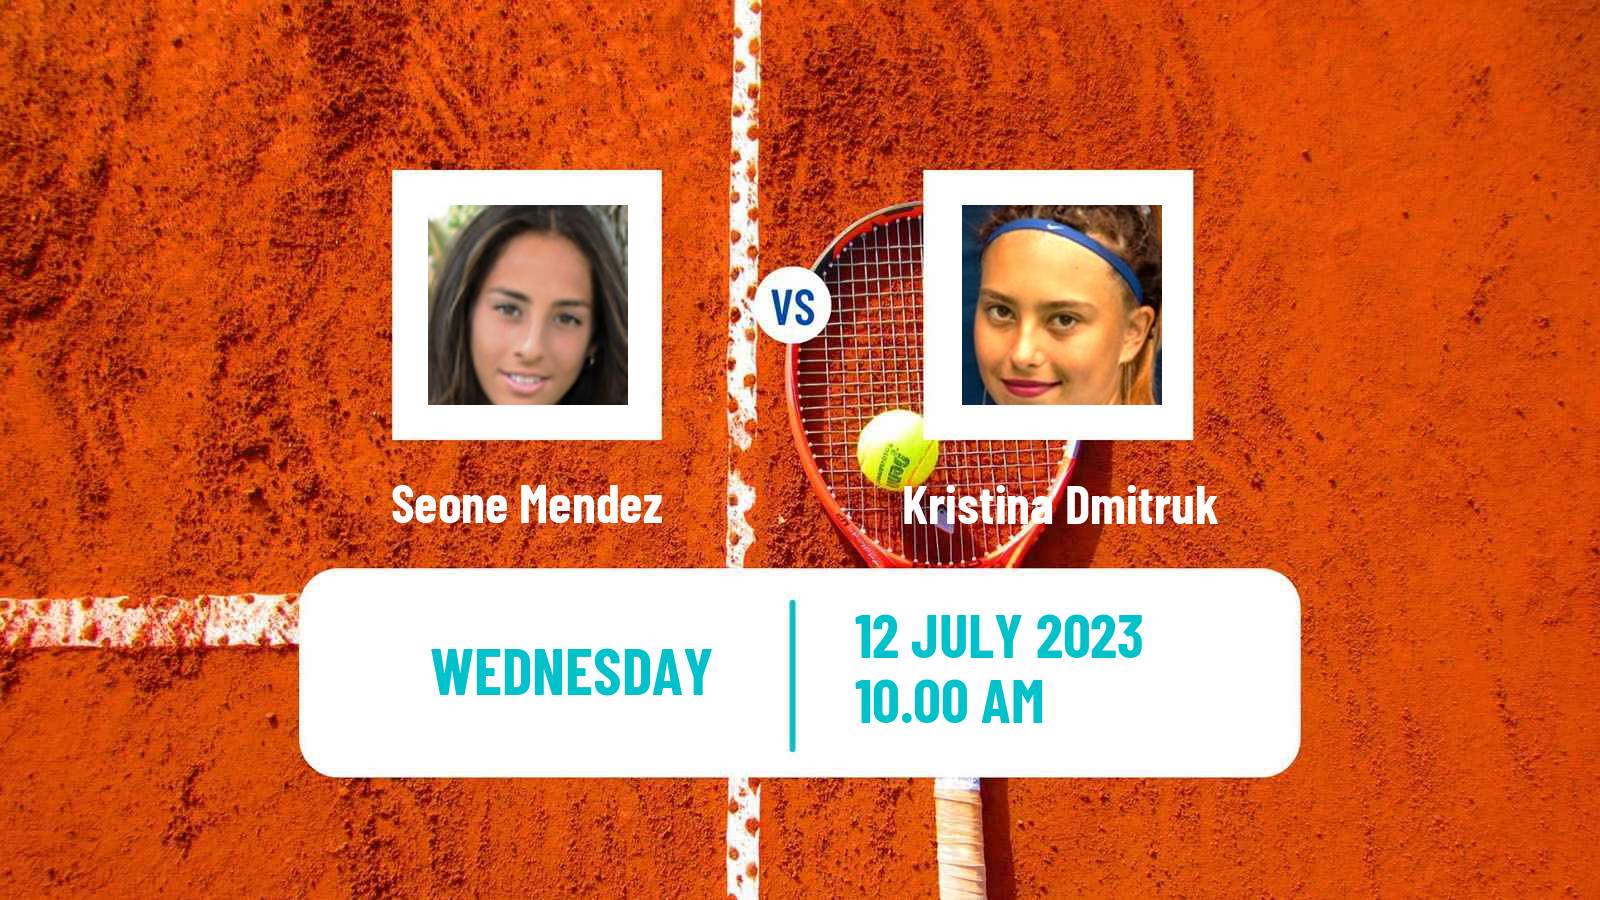 Tennis ITF W60 Rome 2 Women Seone Mendez - Kristina Dmitruk